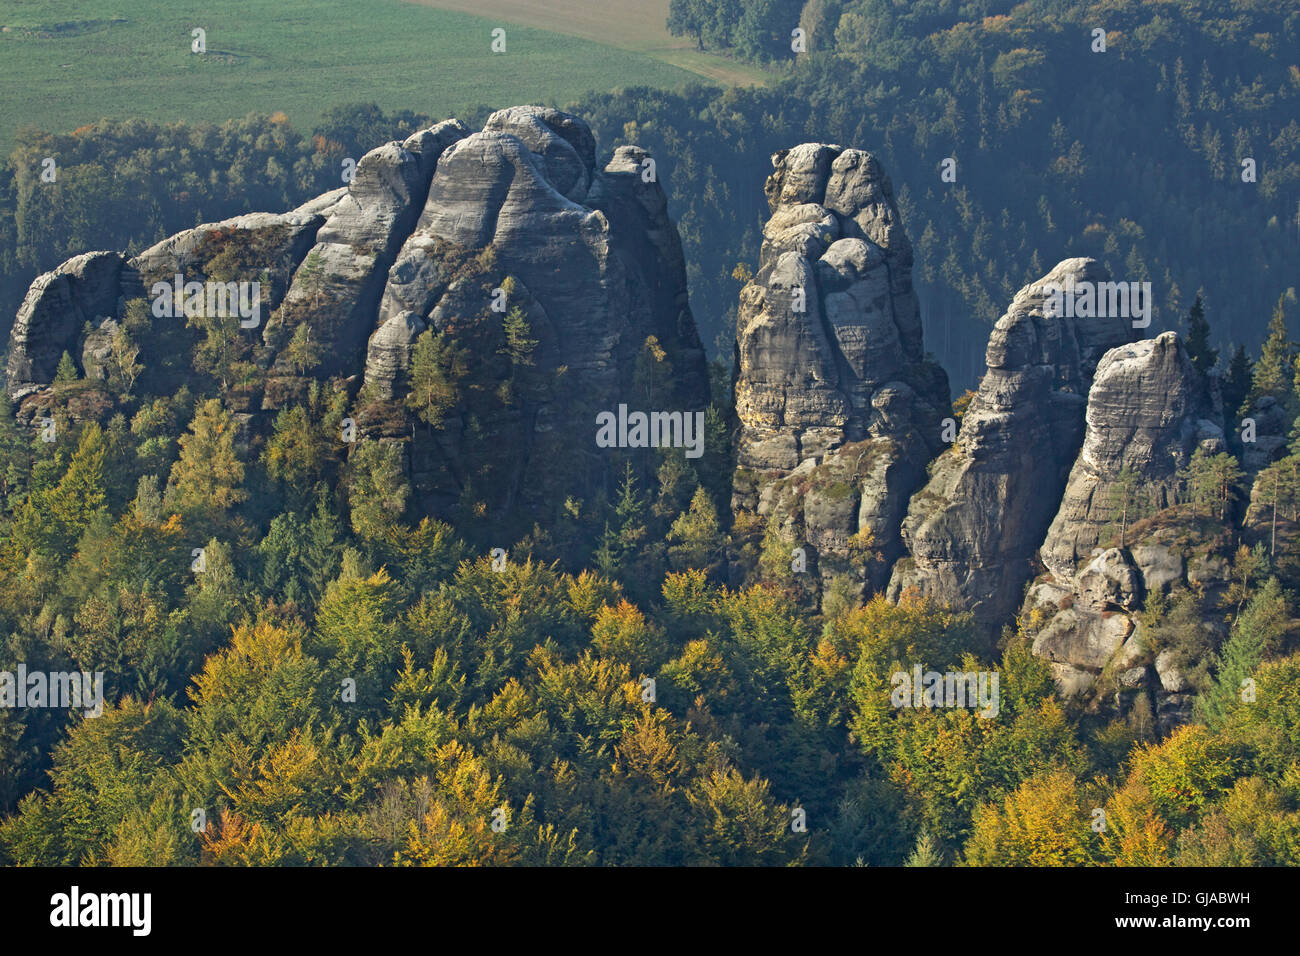 Rocce di arenaria, 'Vorderer Torstein', Meurerturm, Schrammsteine, Svizzera Sassone, foresta di faggio, autunnale, Foto Stock